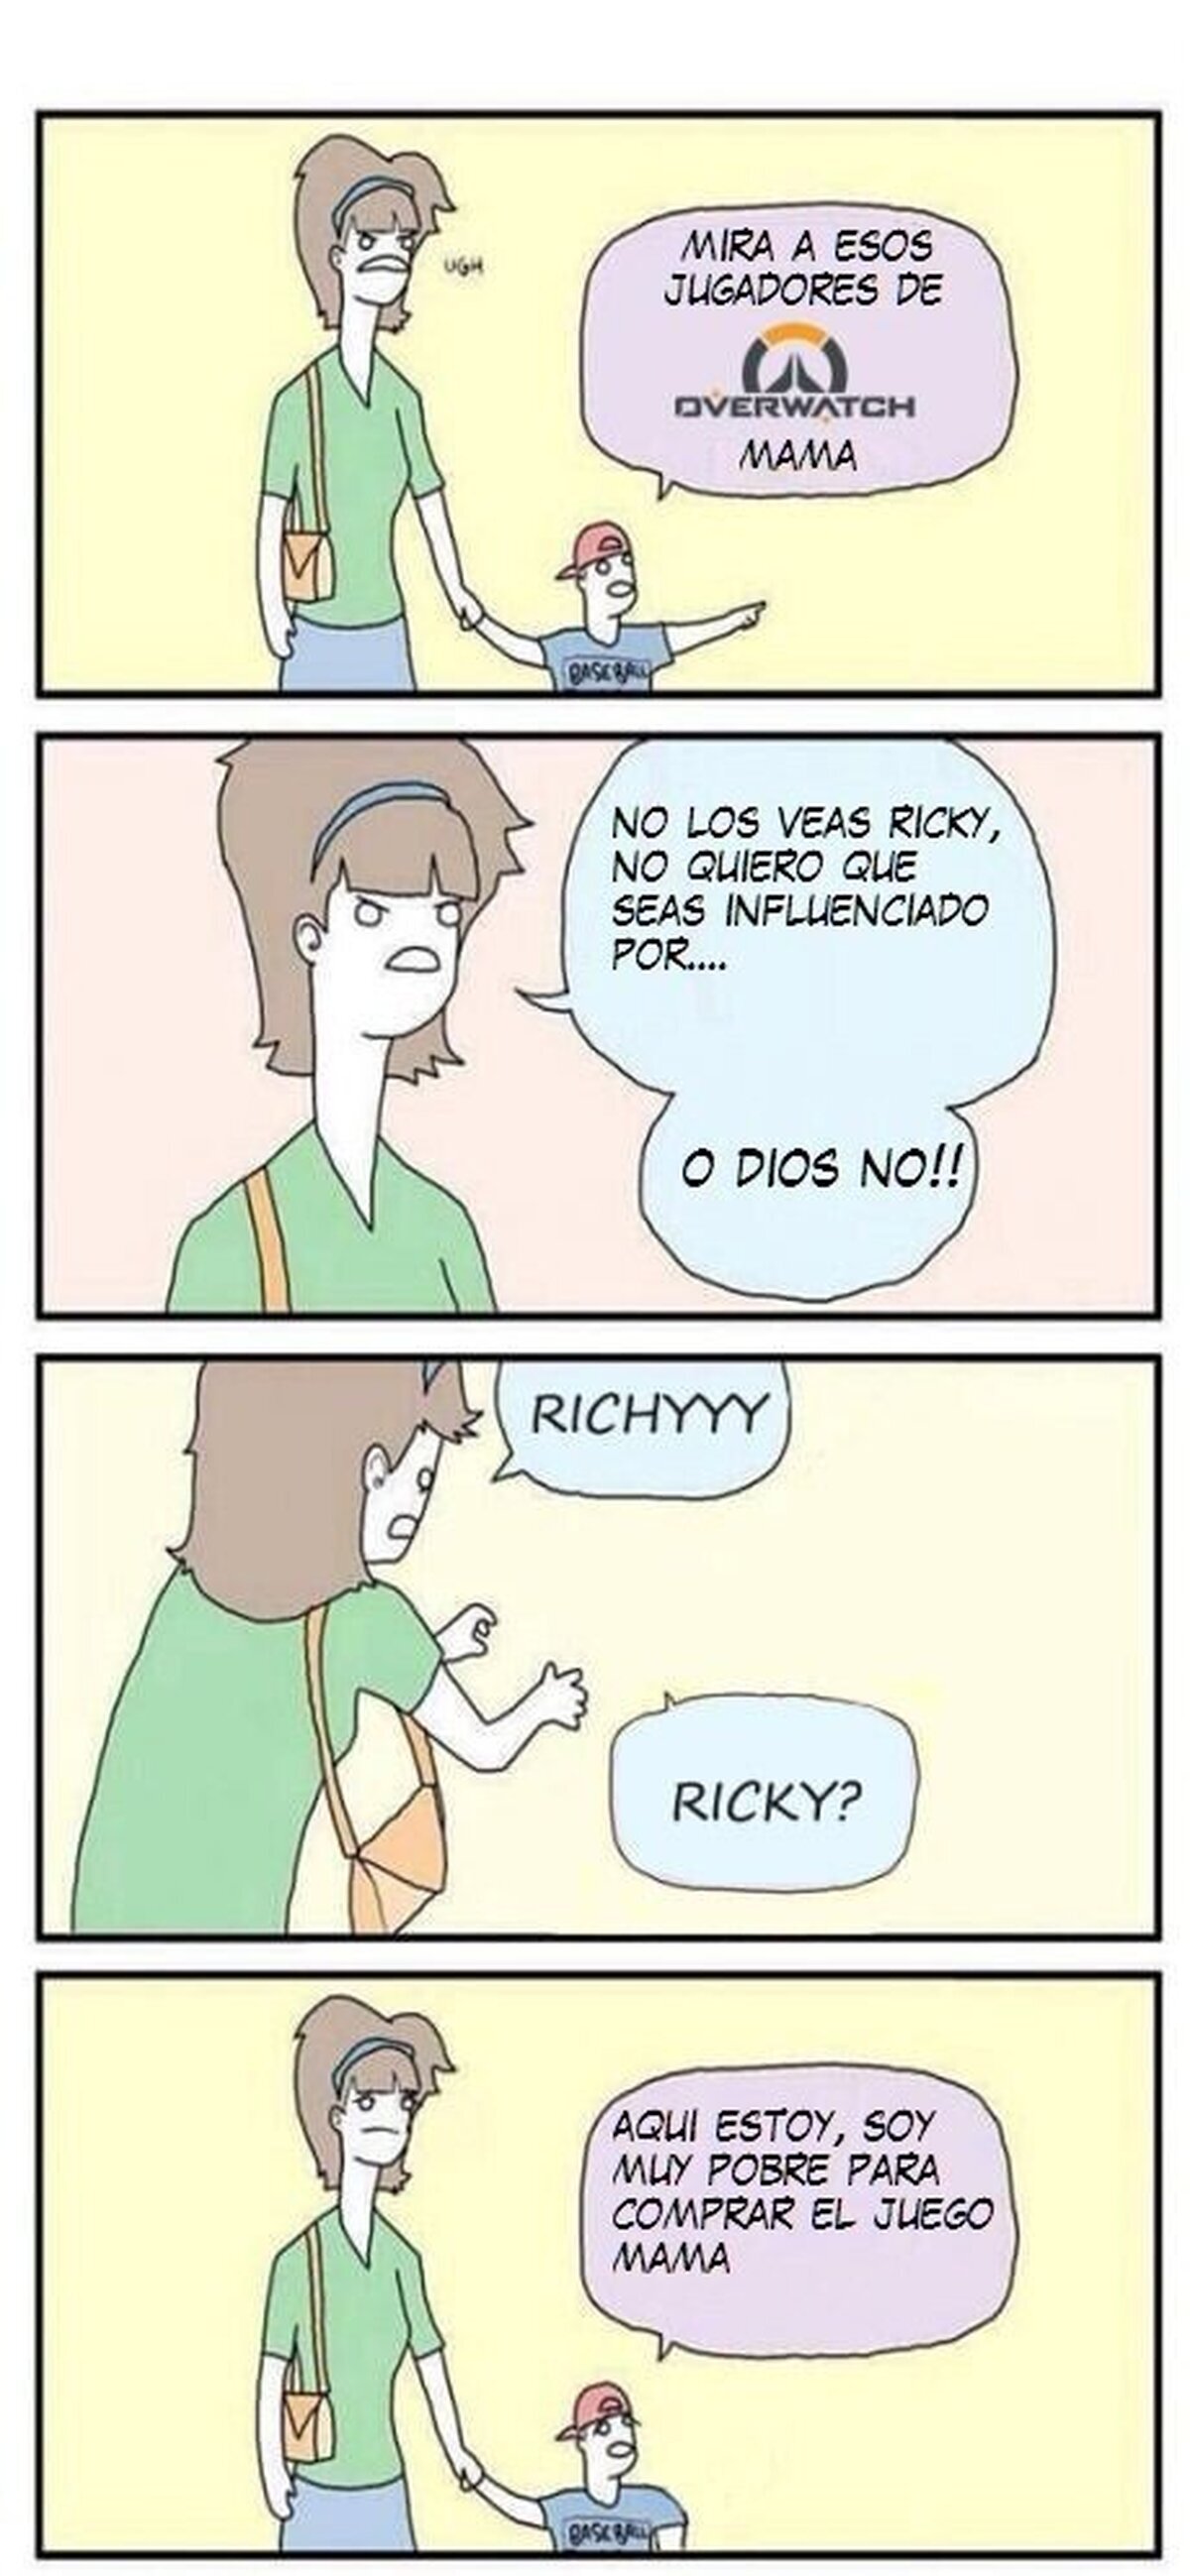 Suerte para la próxima Ricky